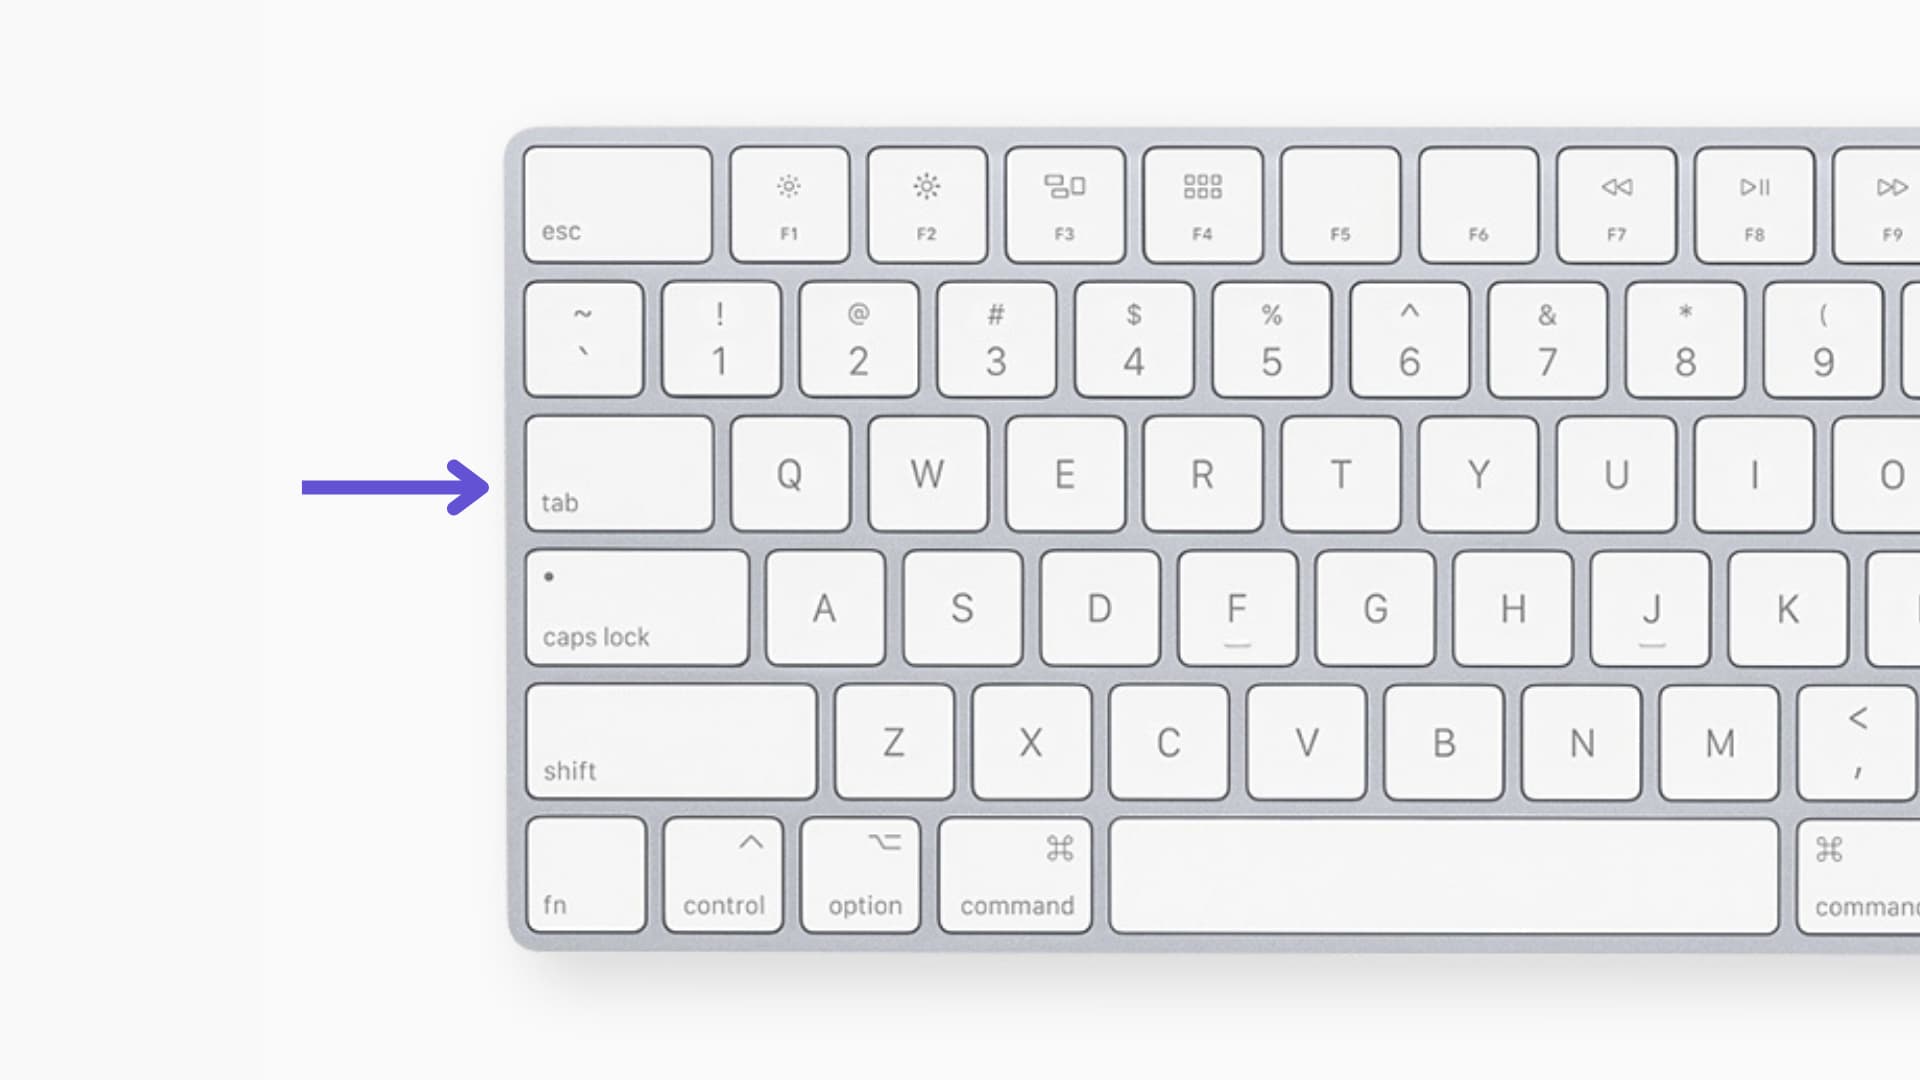 Tab key on Mac's keyboard